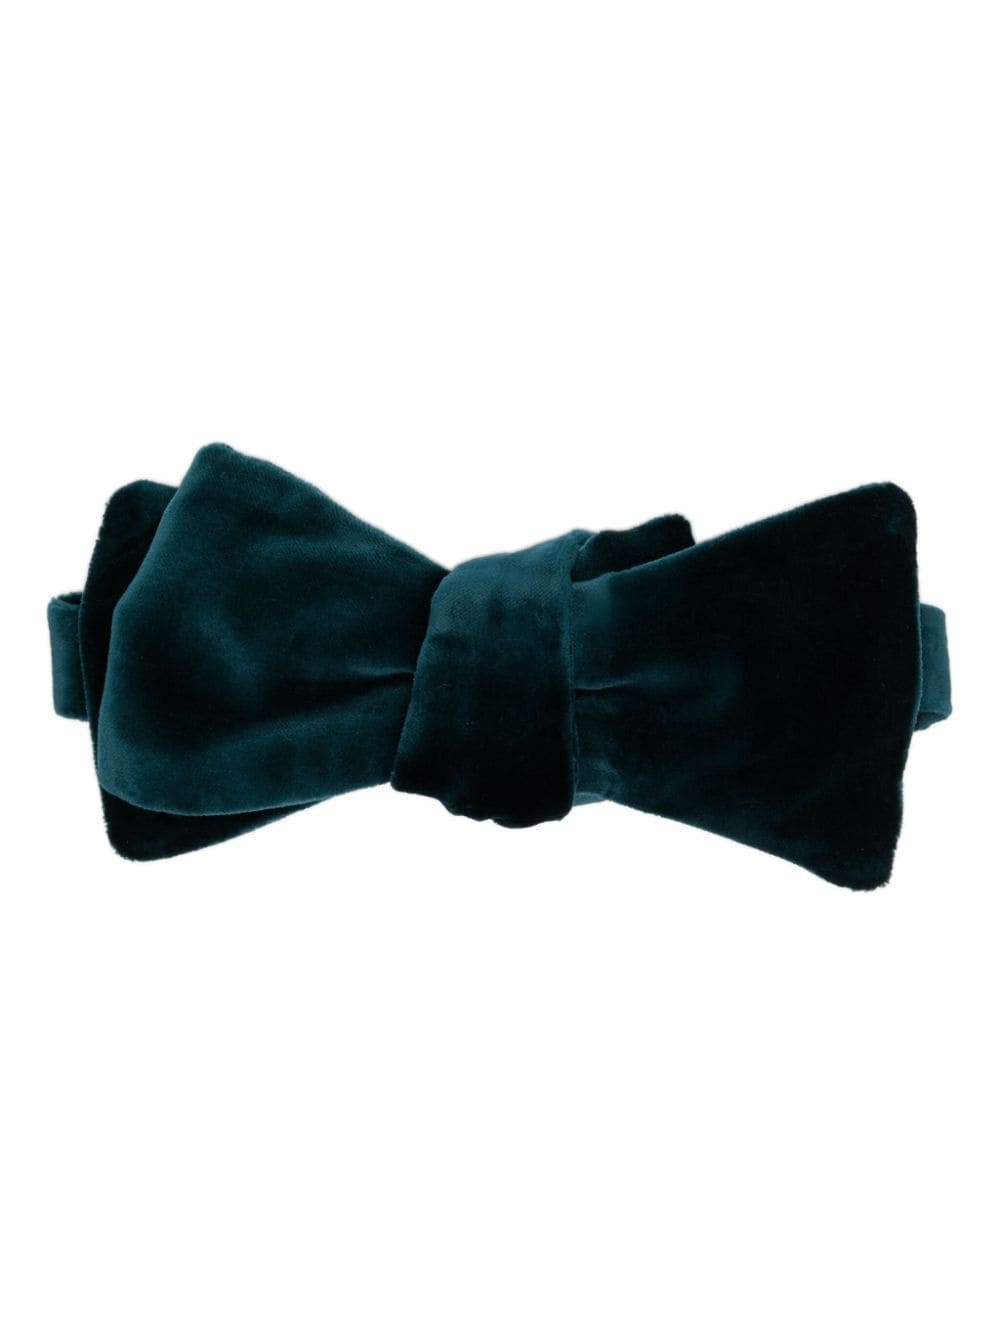 Paul Smith adjustable velvet bow tie - Green von Paul Smith